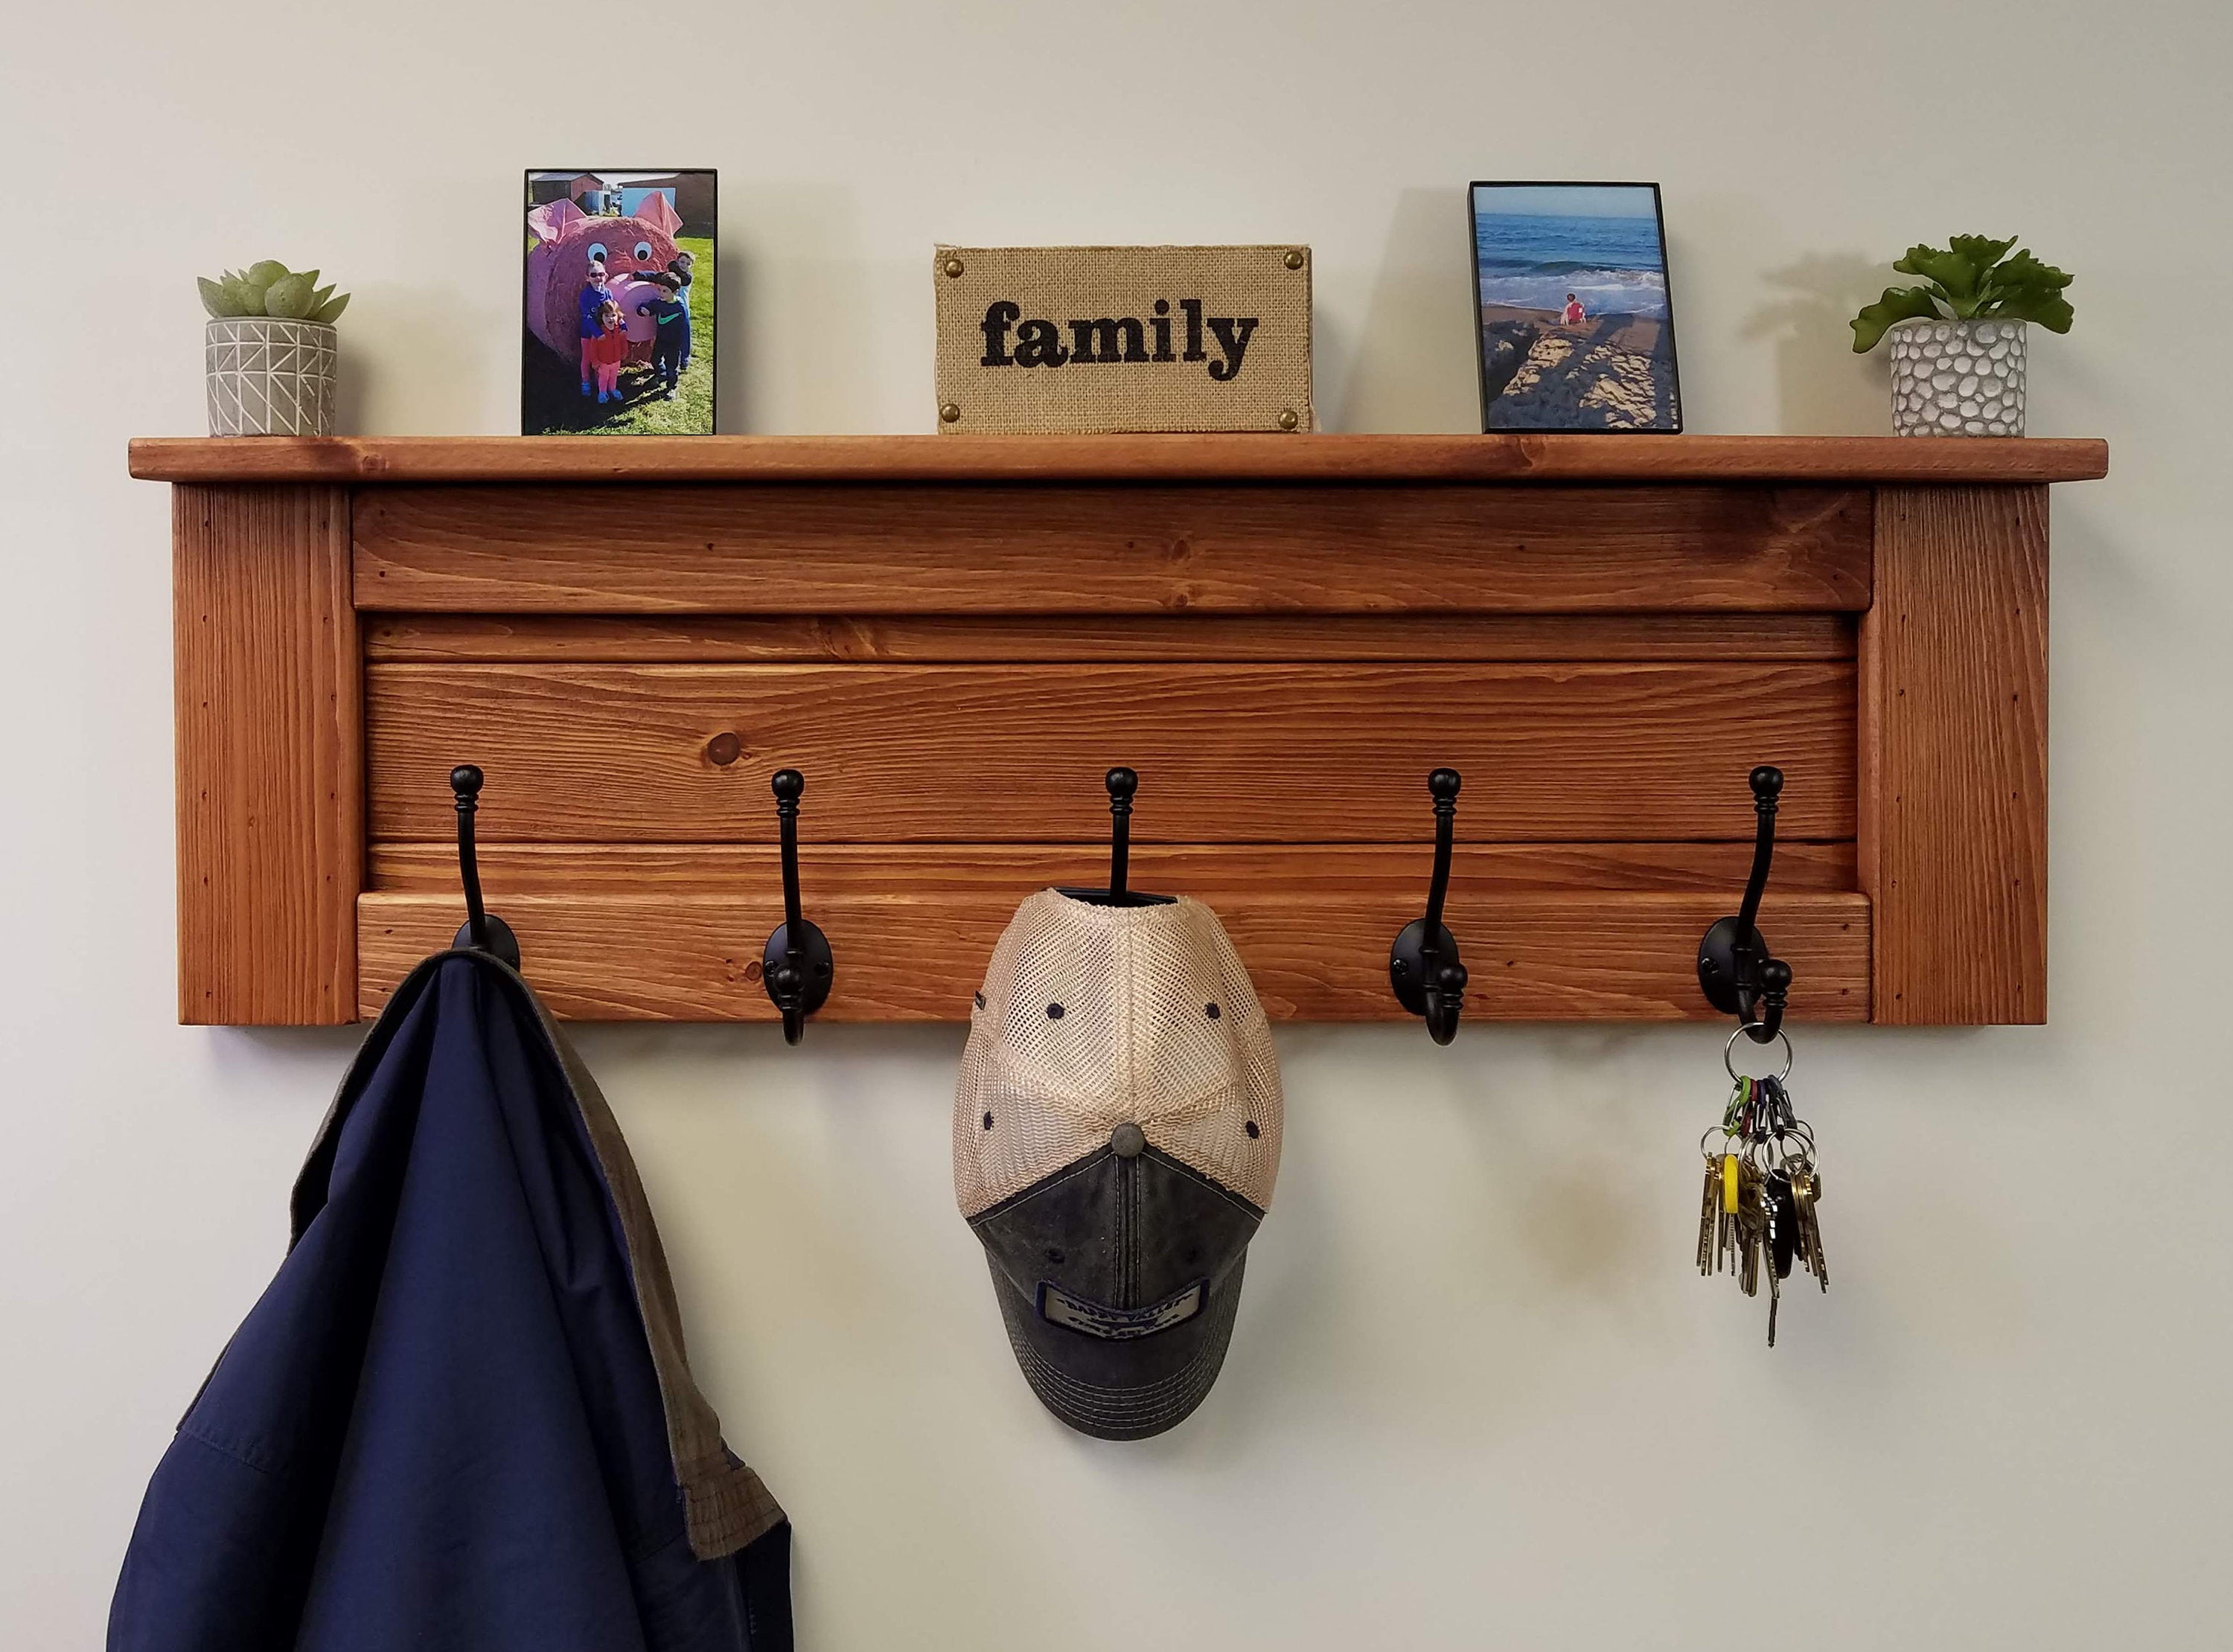 Langhorne Wall Coat Hook Rack with Shelf, Handmade in the USA